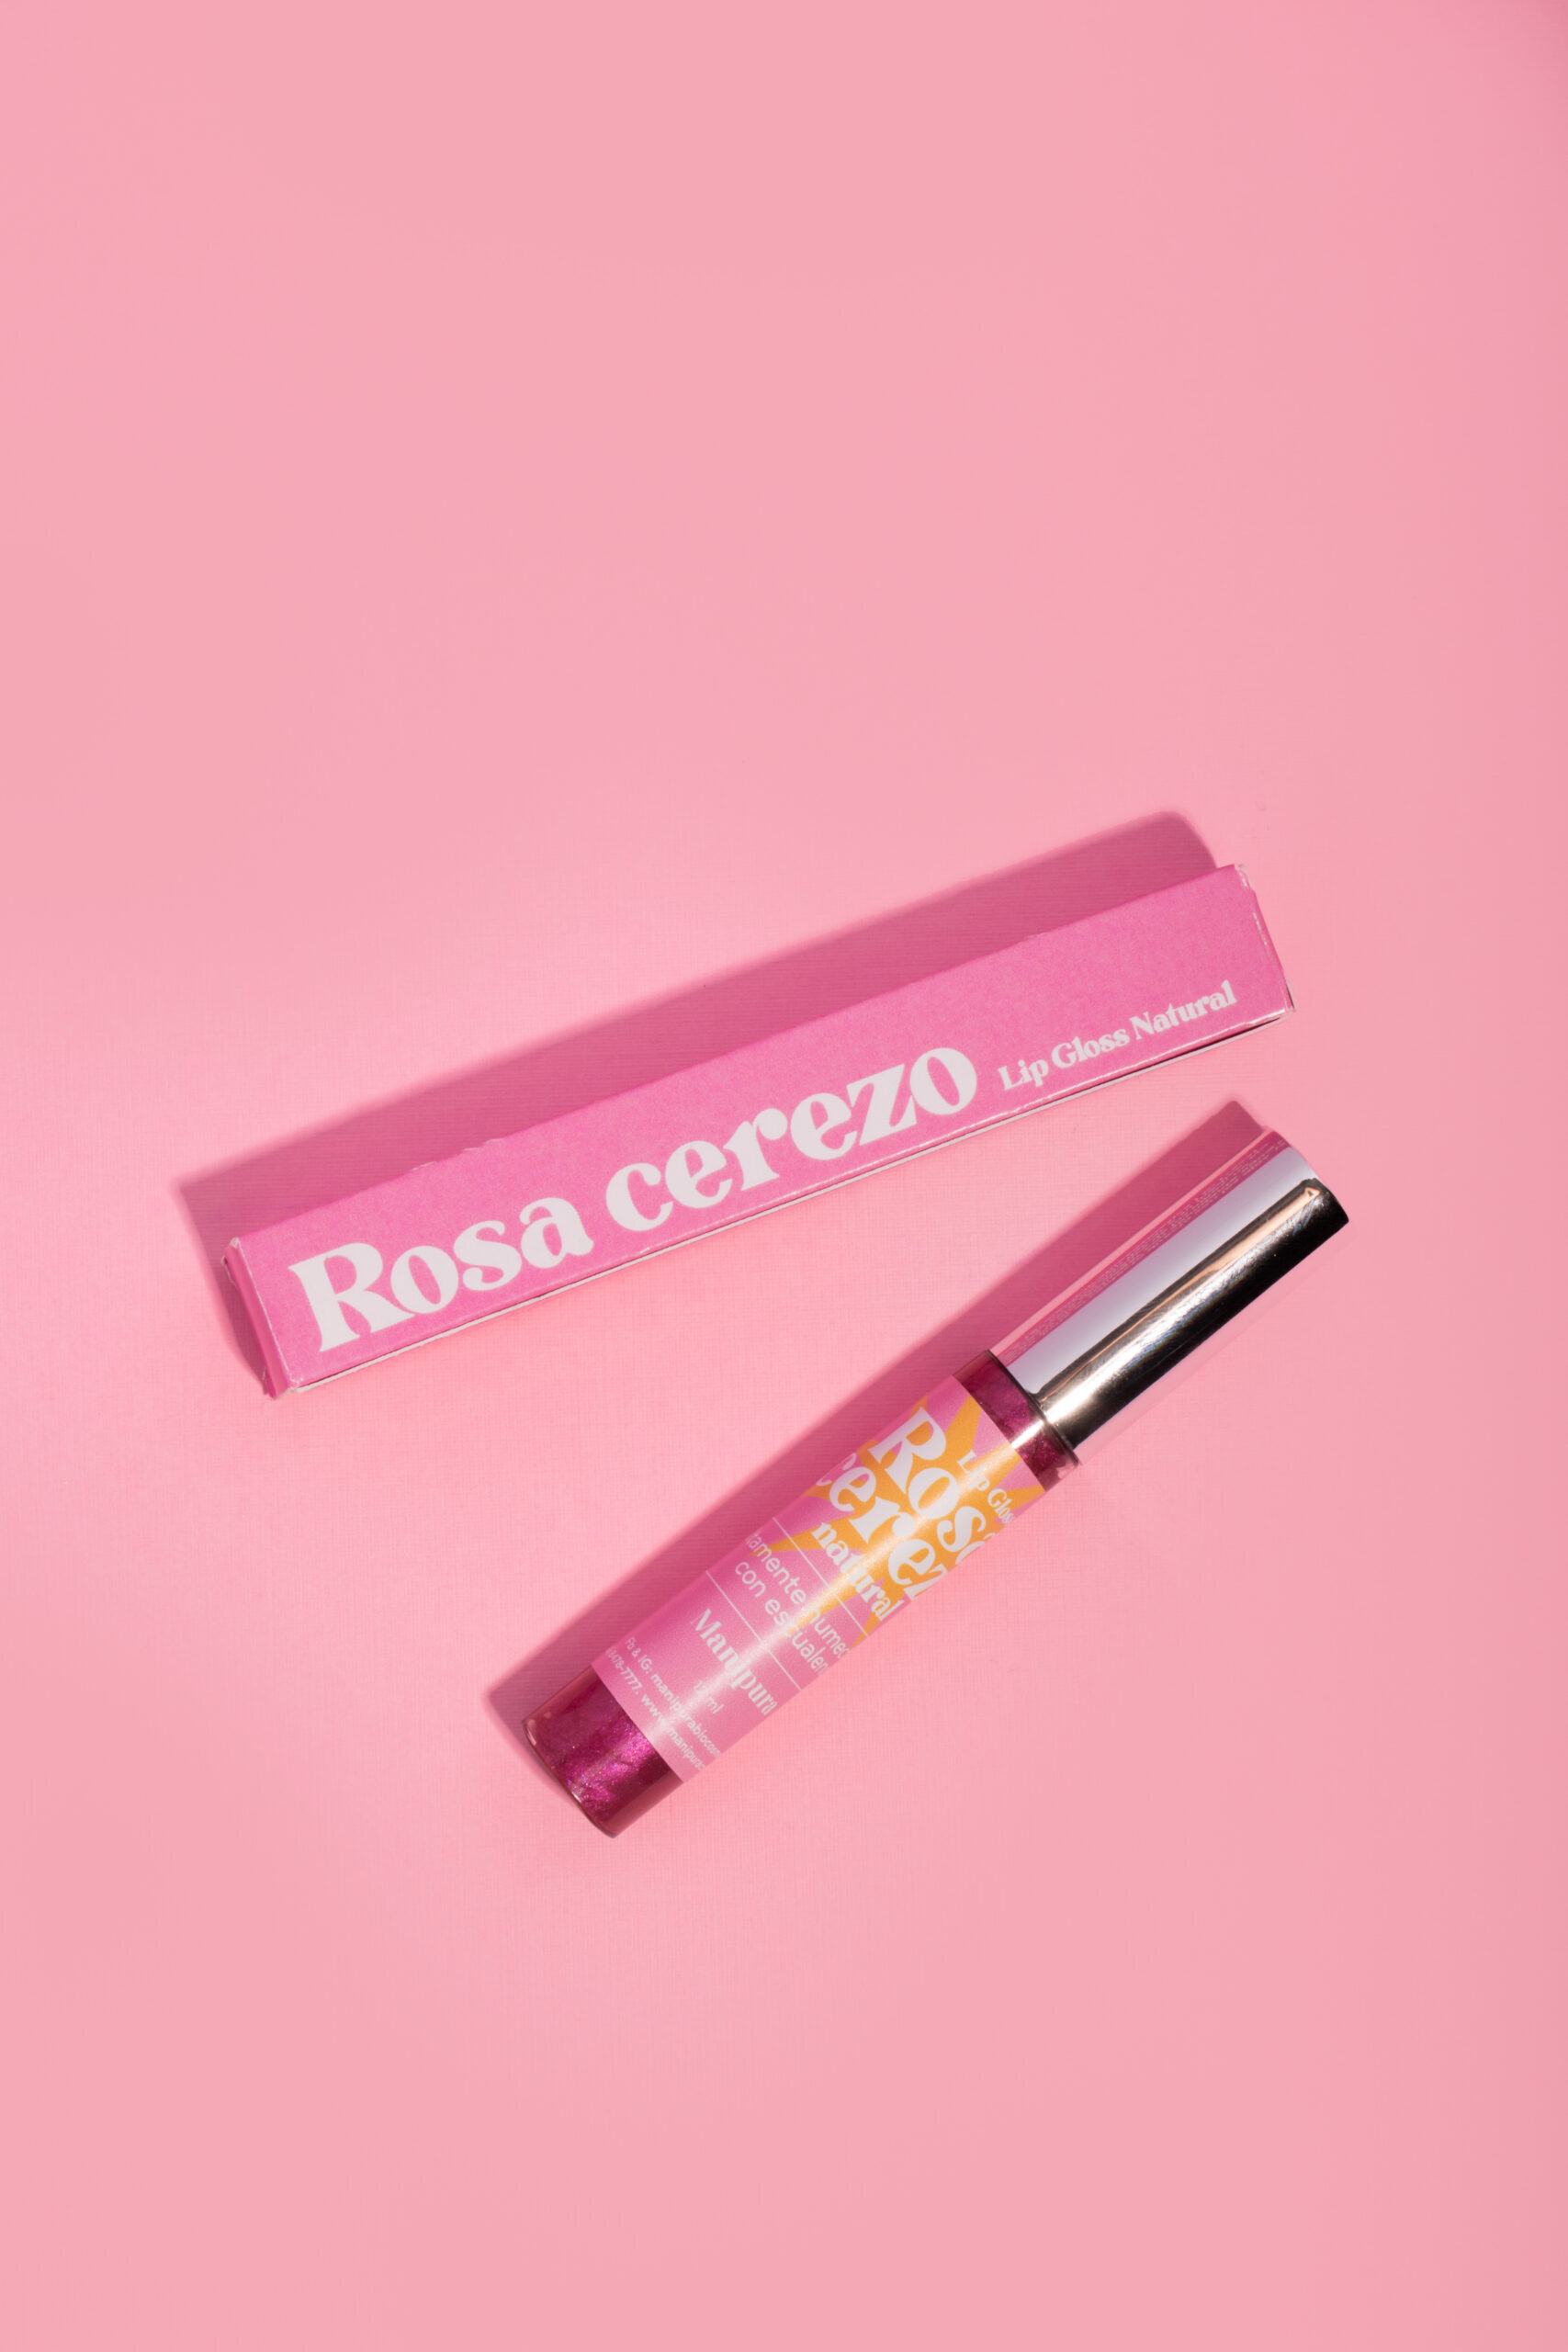 Manipura cosmetica natural https://manipuracosmetics.com/product/lip-gloss-rosa-cerezo/